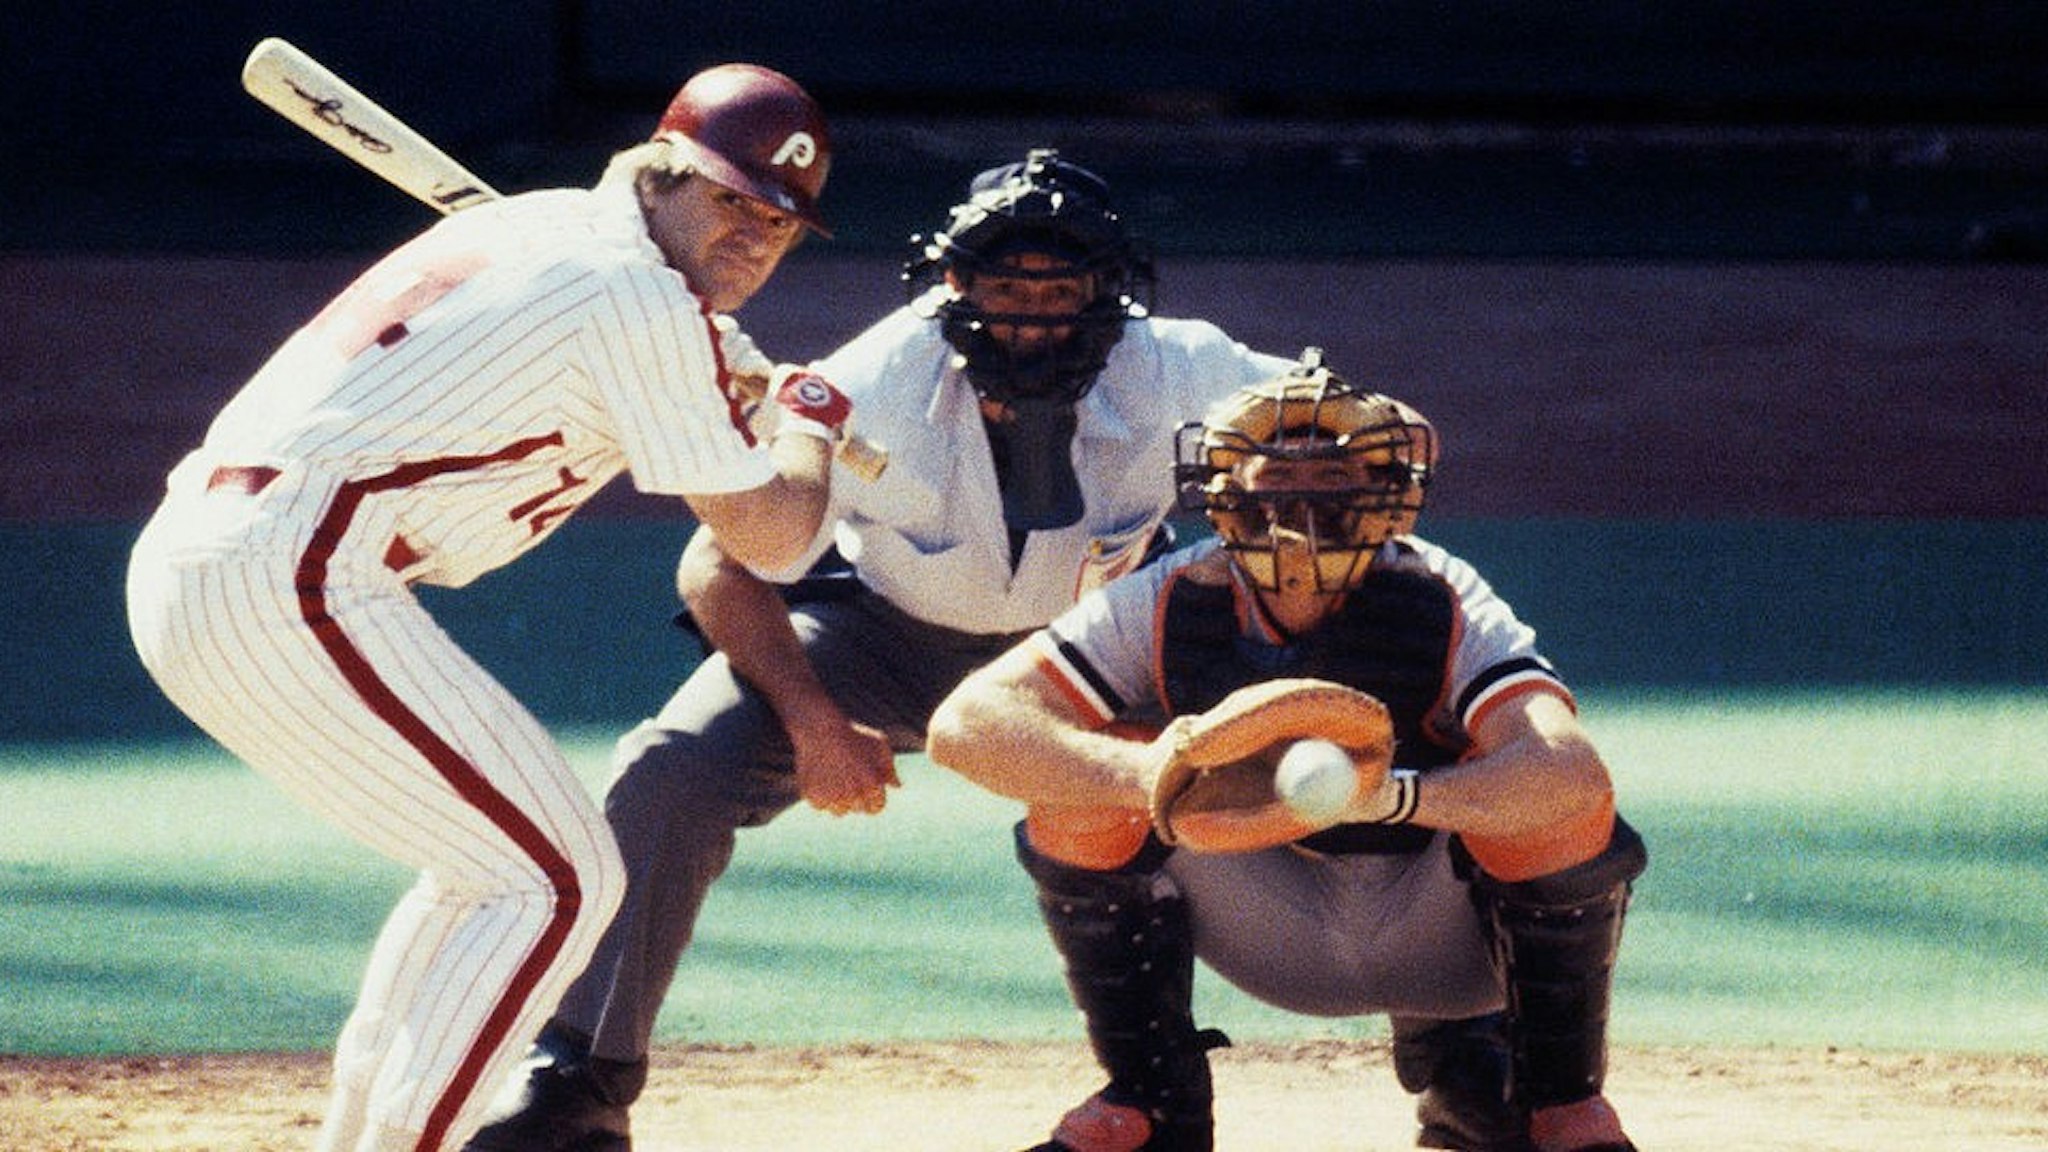 PHILADELPHIA - OCTOBER 1983: Pete Rose #14 of the Philadelphia Phillies bats against the